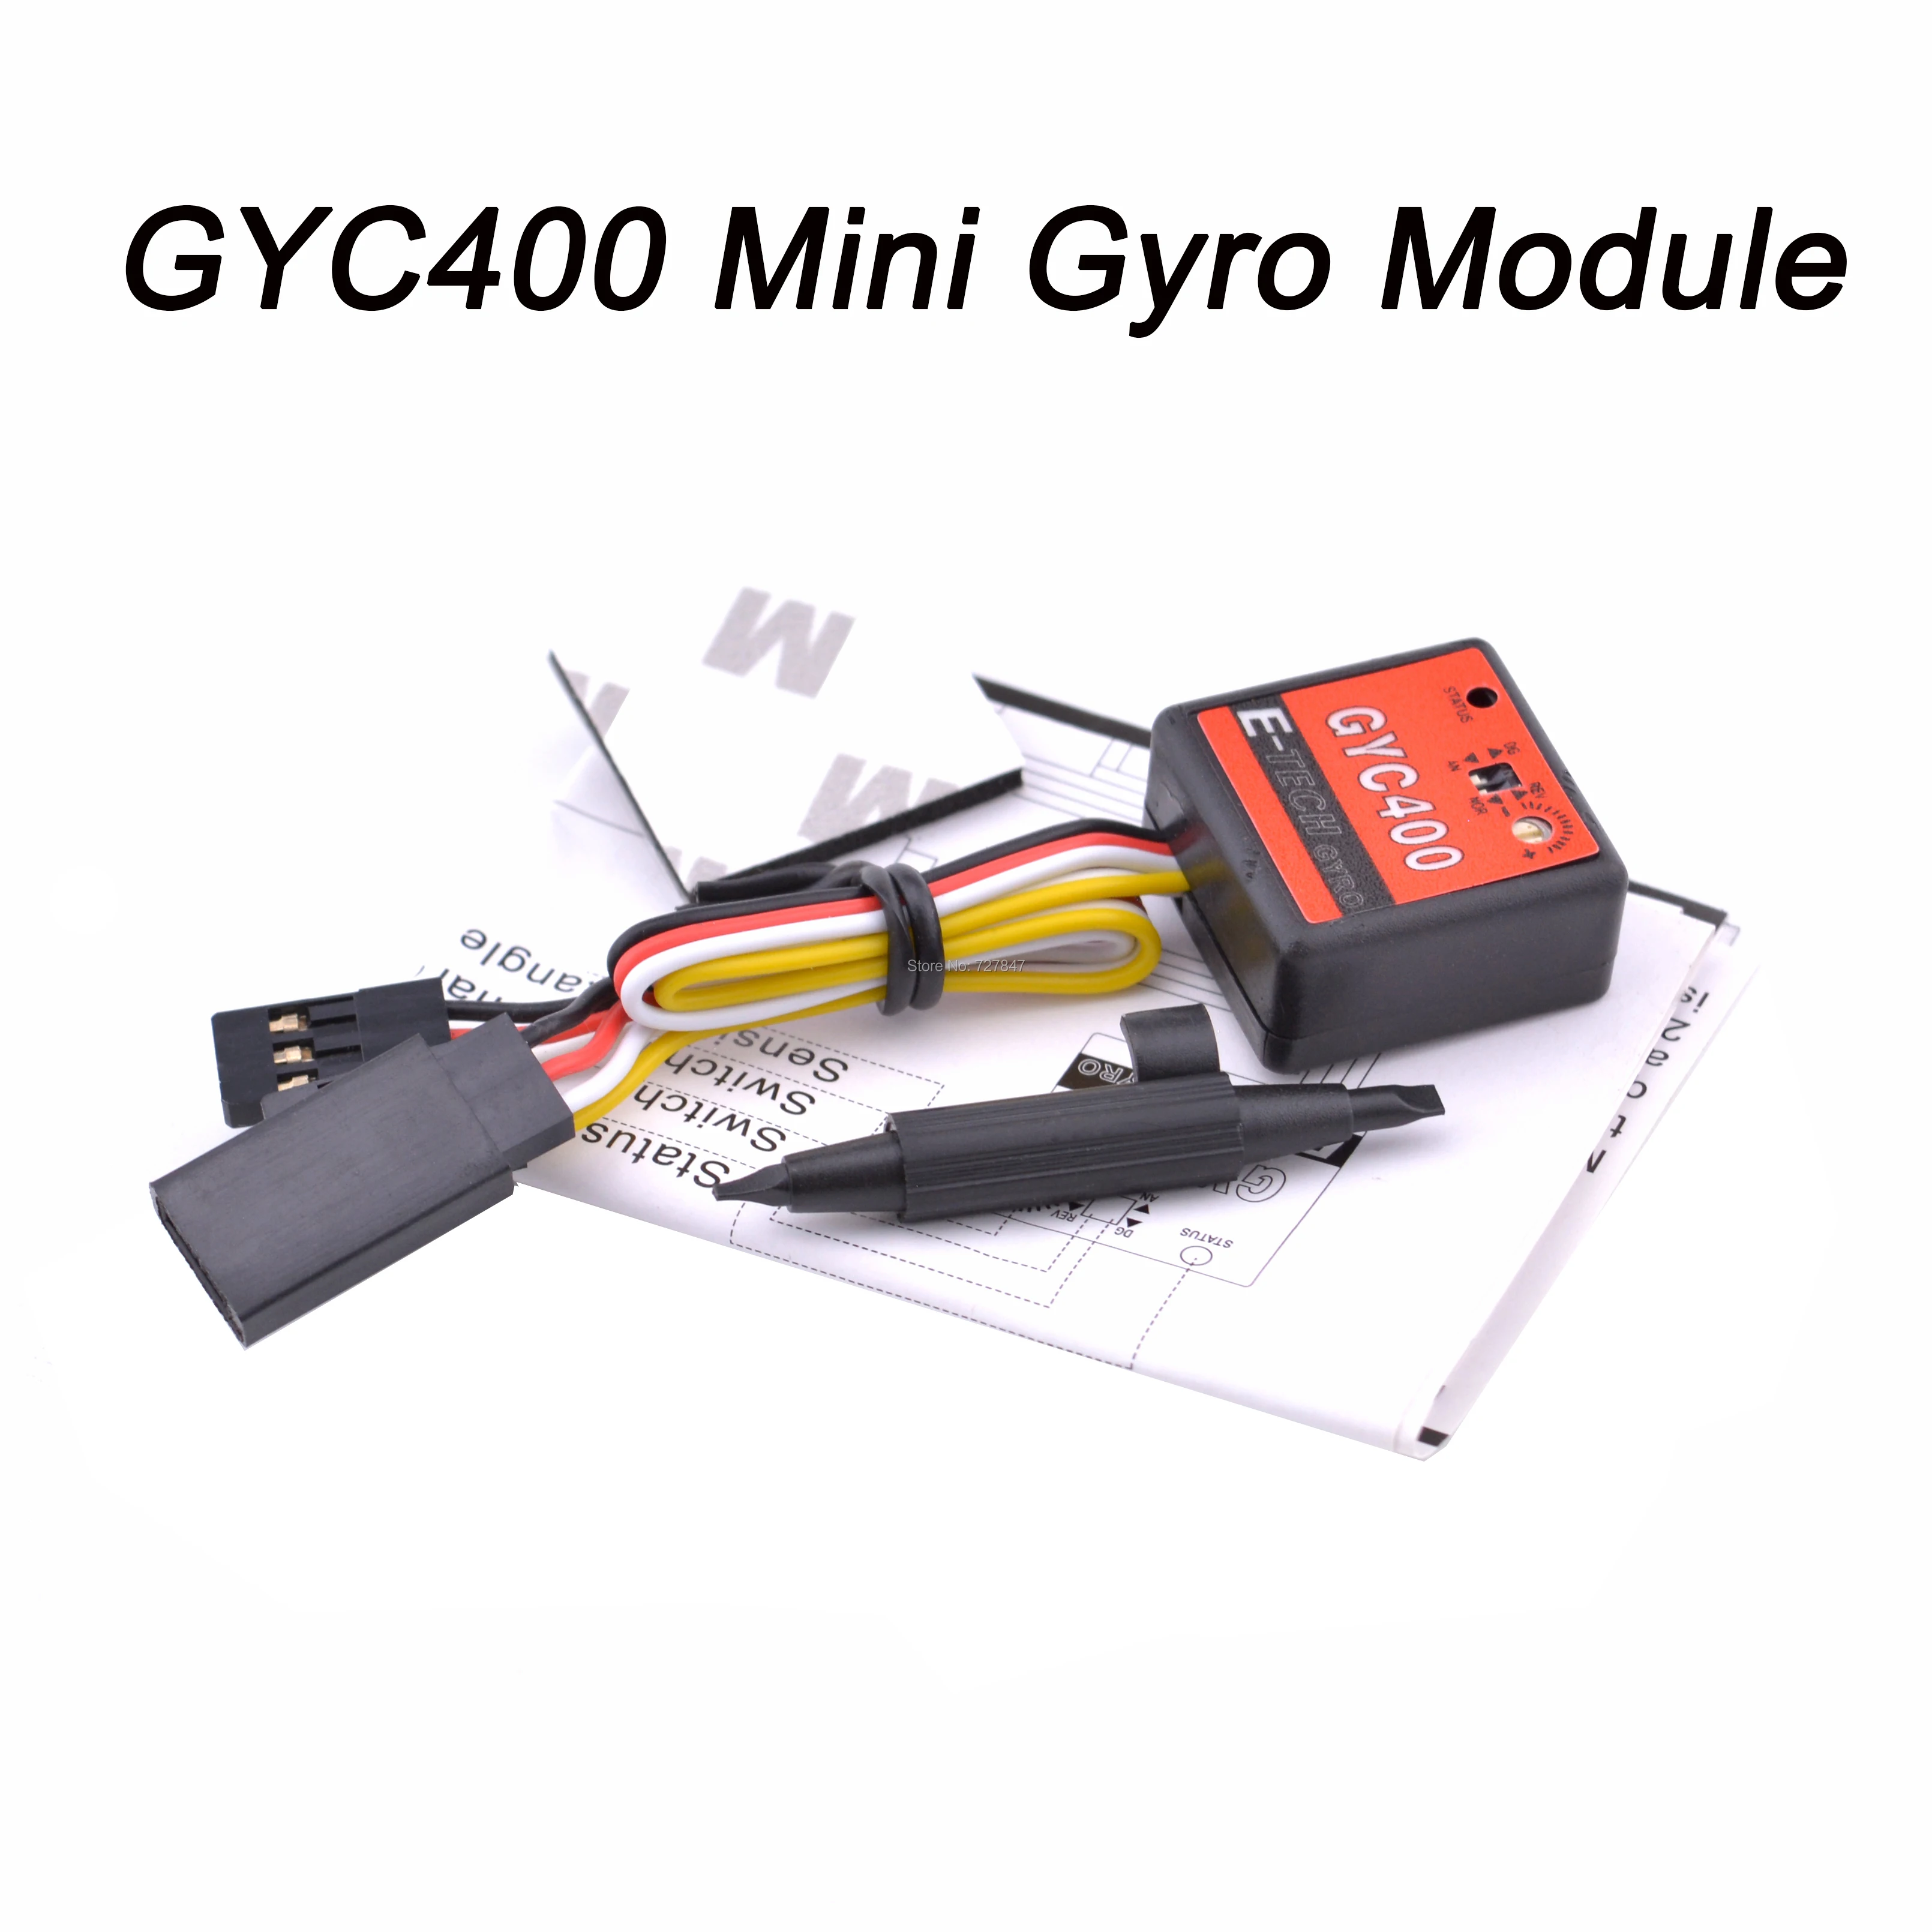 

Upgrade GYC400 Mini Gyro Module for Cars Drift Drive Control Remote Control Car Parts Accessories